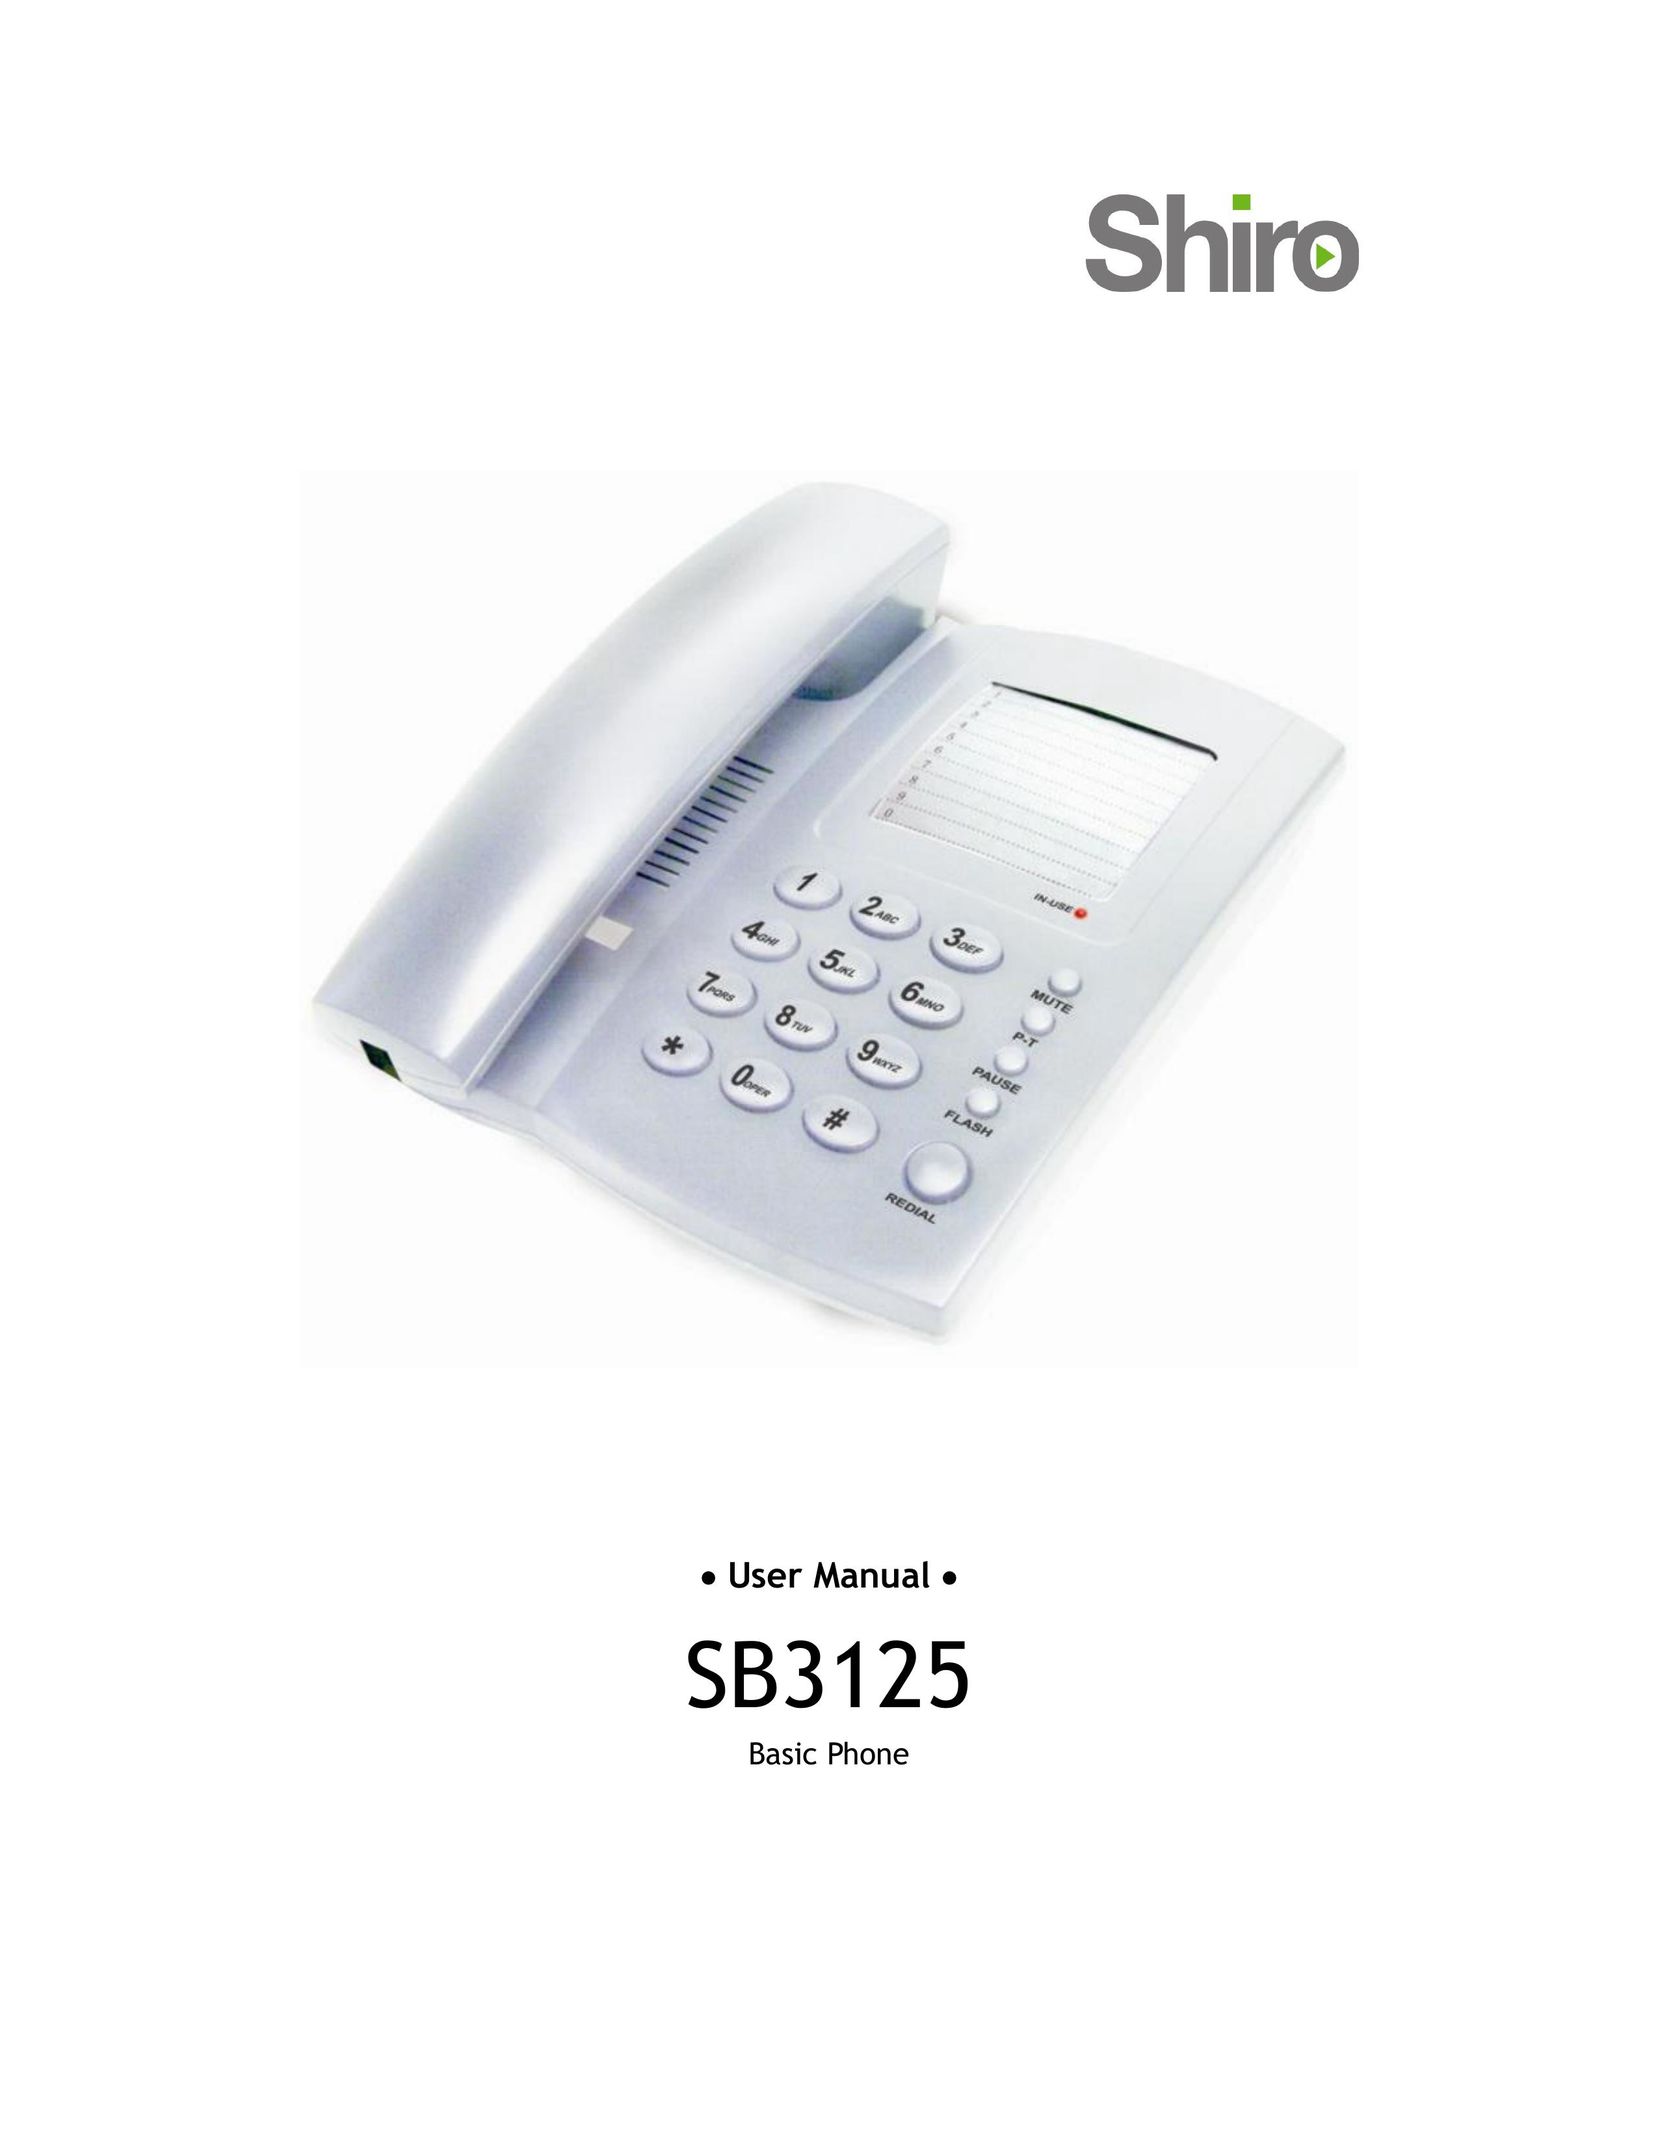 Shiro SB3125 Telephone User Manual